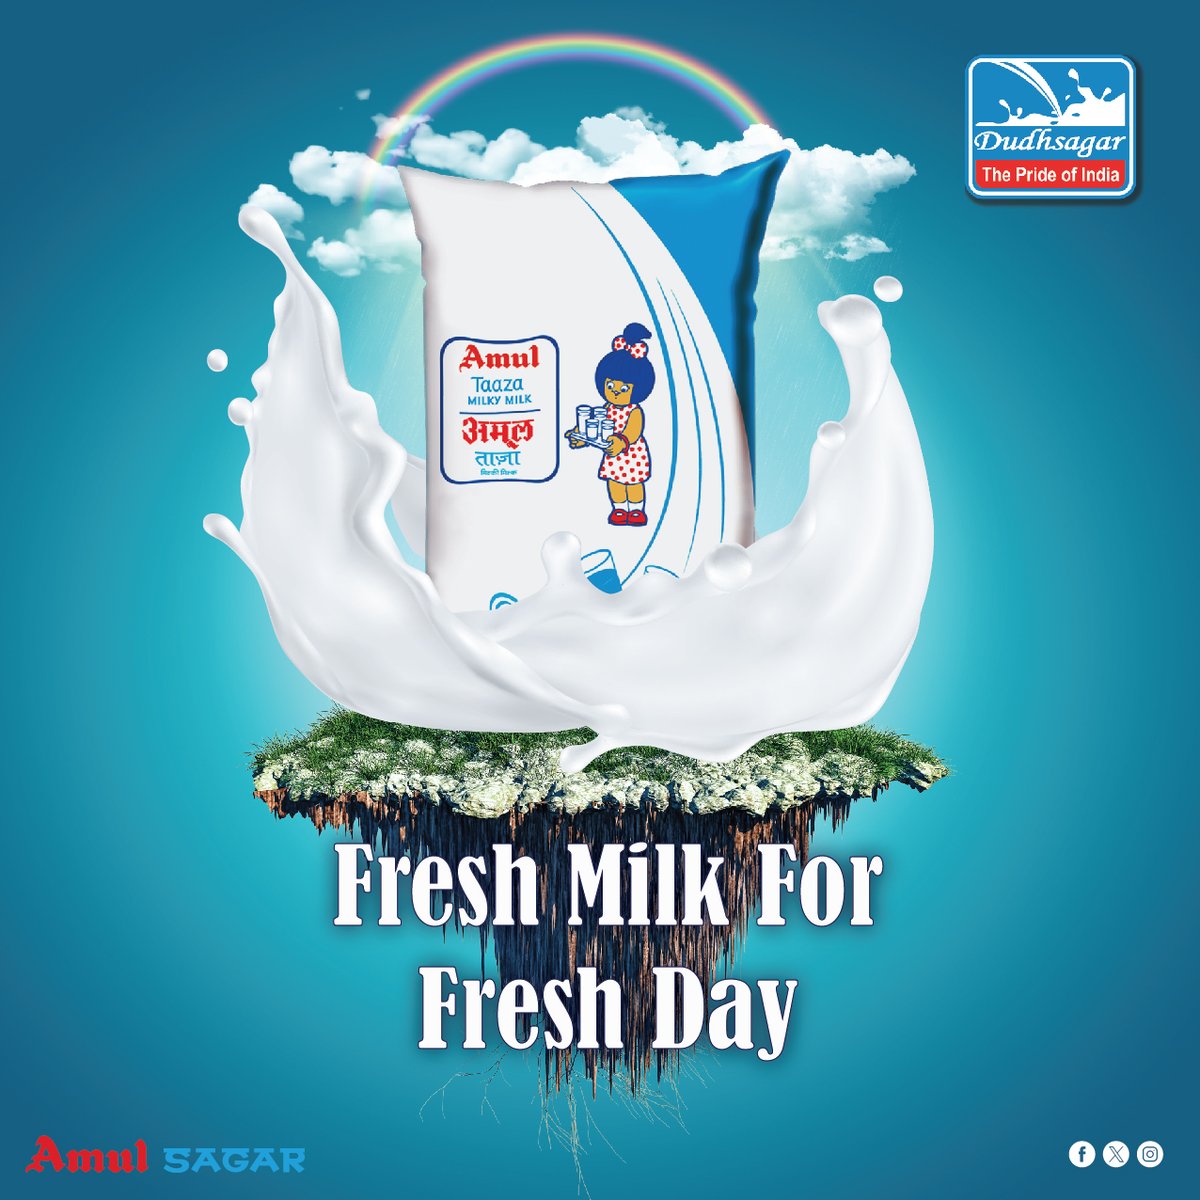 Start your day fresh with Amul Taaza! 🌞🥛

Enjoy the goodness of fresh milk for a refreshing start to every day.
.
.
#dudhsagardairy #Amul #sagar #FreshMilkForFreshDay #AmulTaaza #milk #dairyproduct #DairyIndia #dudhsagar #theprideofindia #stayhealthy #mehsana #gujarat #india